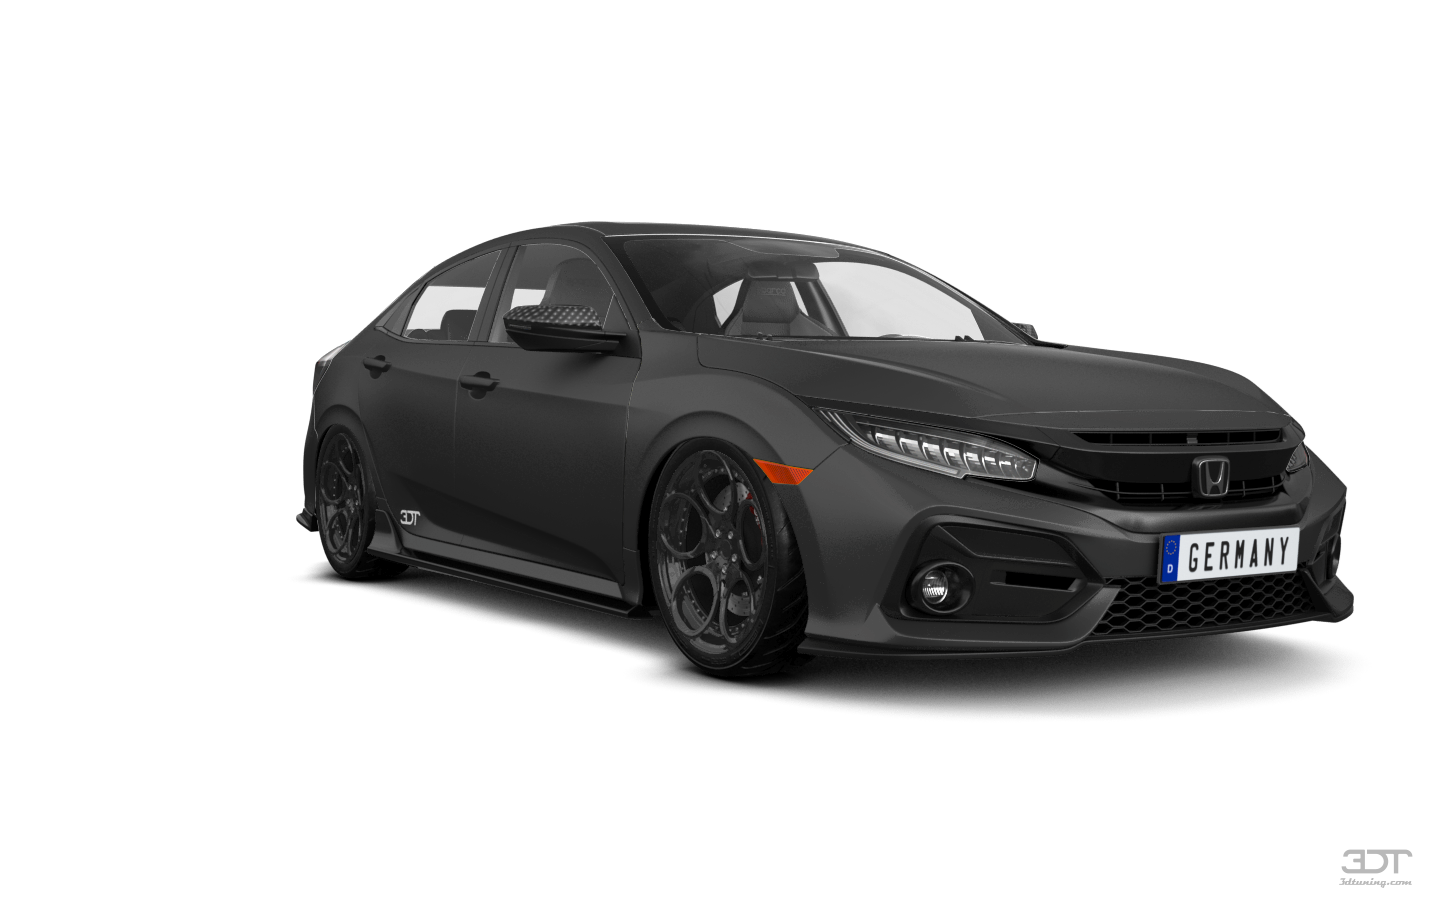 Honda Civic Hatchback 2018 tuning